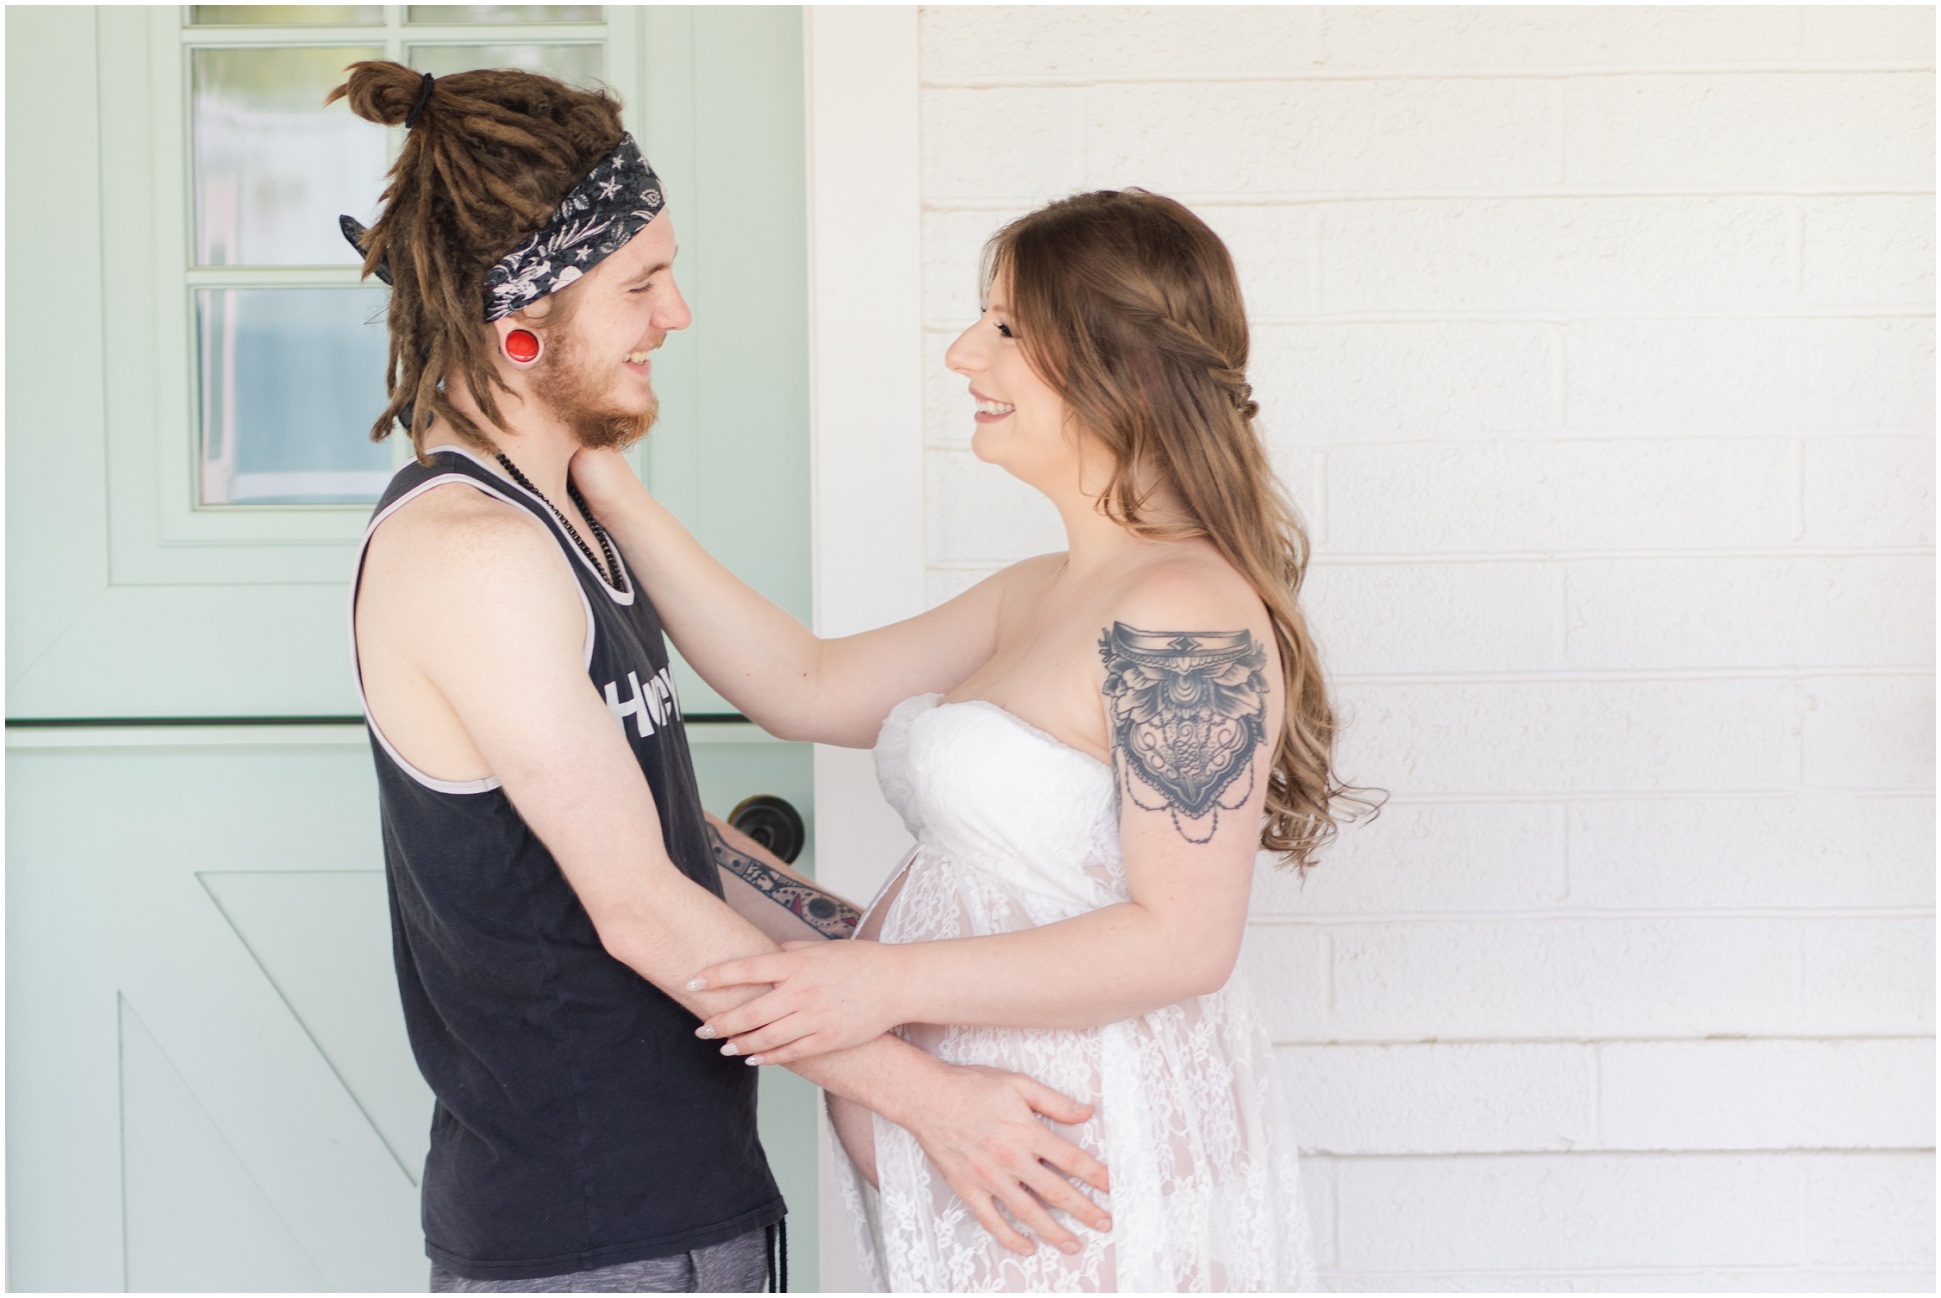 Pregnant Woman wearing lace maternity dress embracing husband